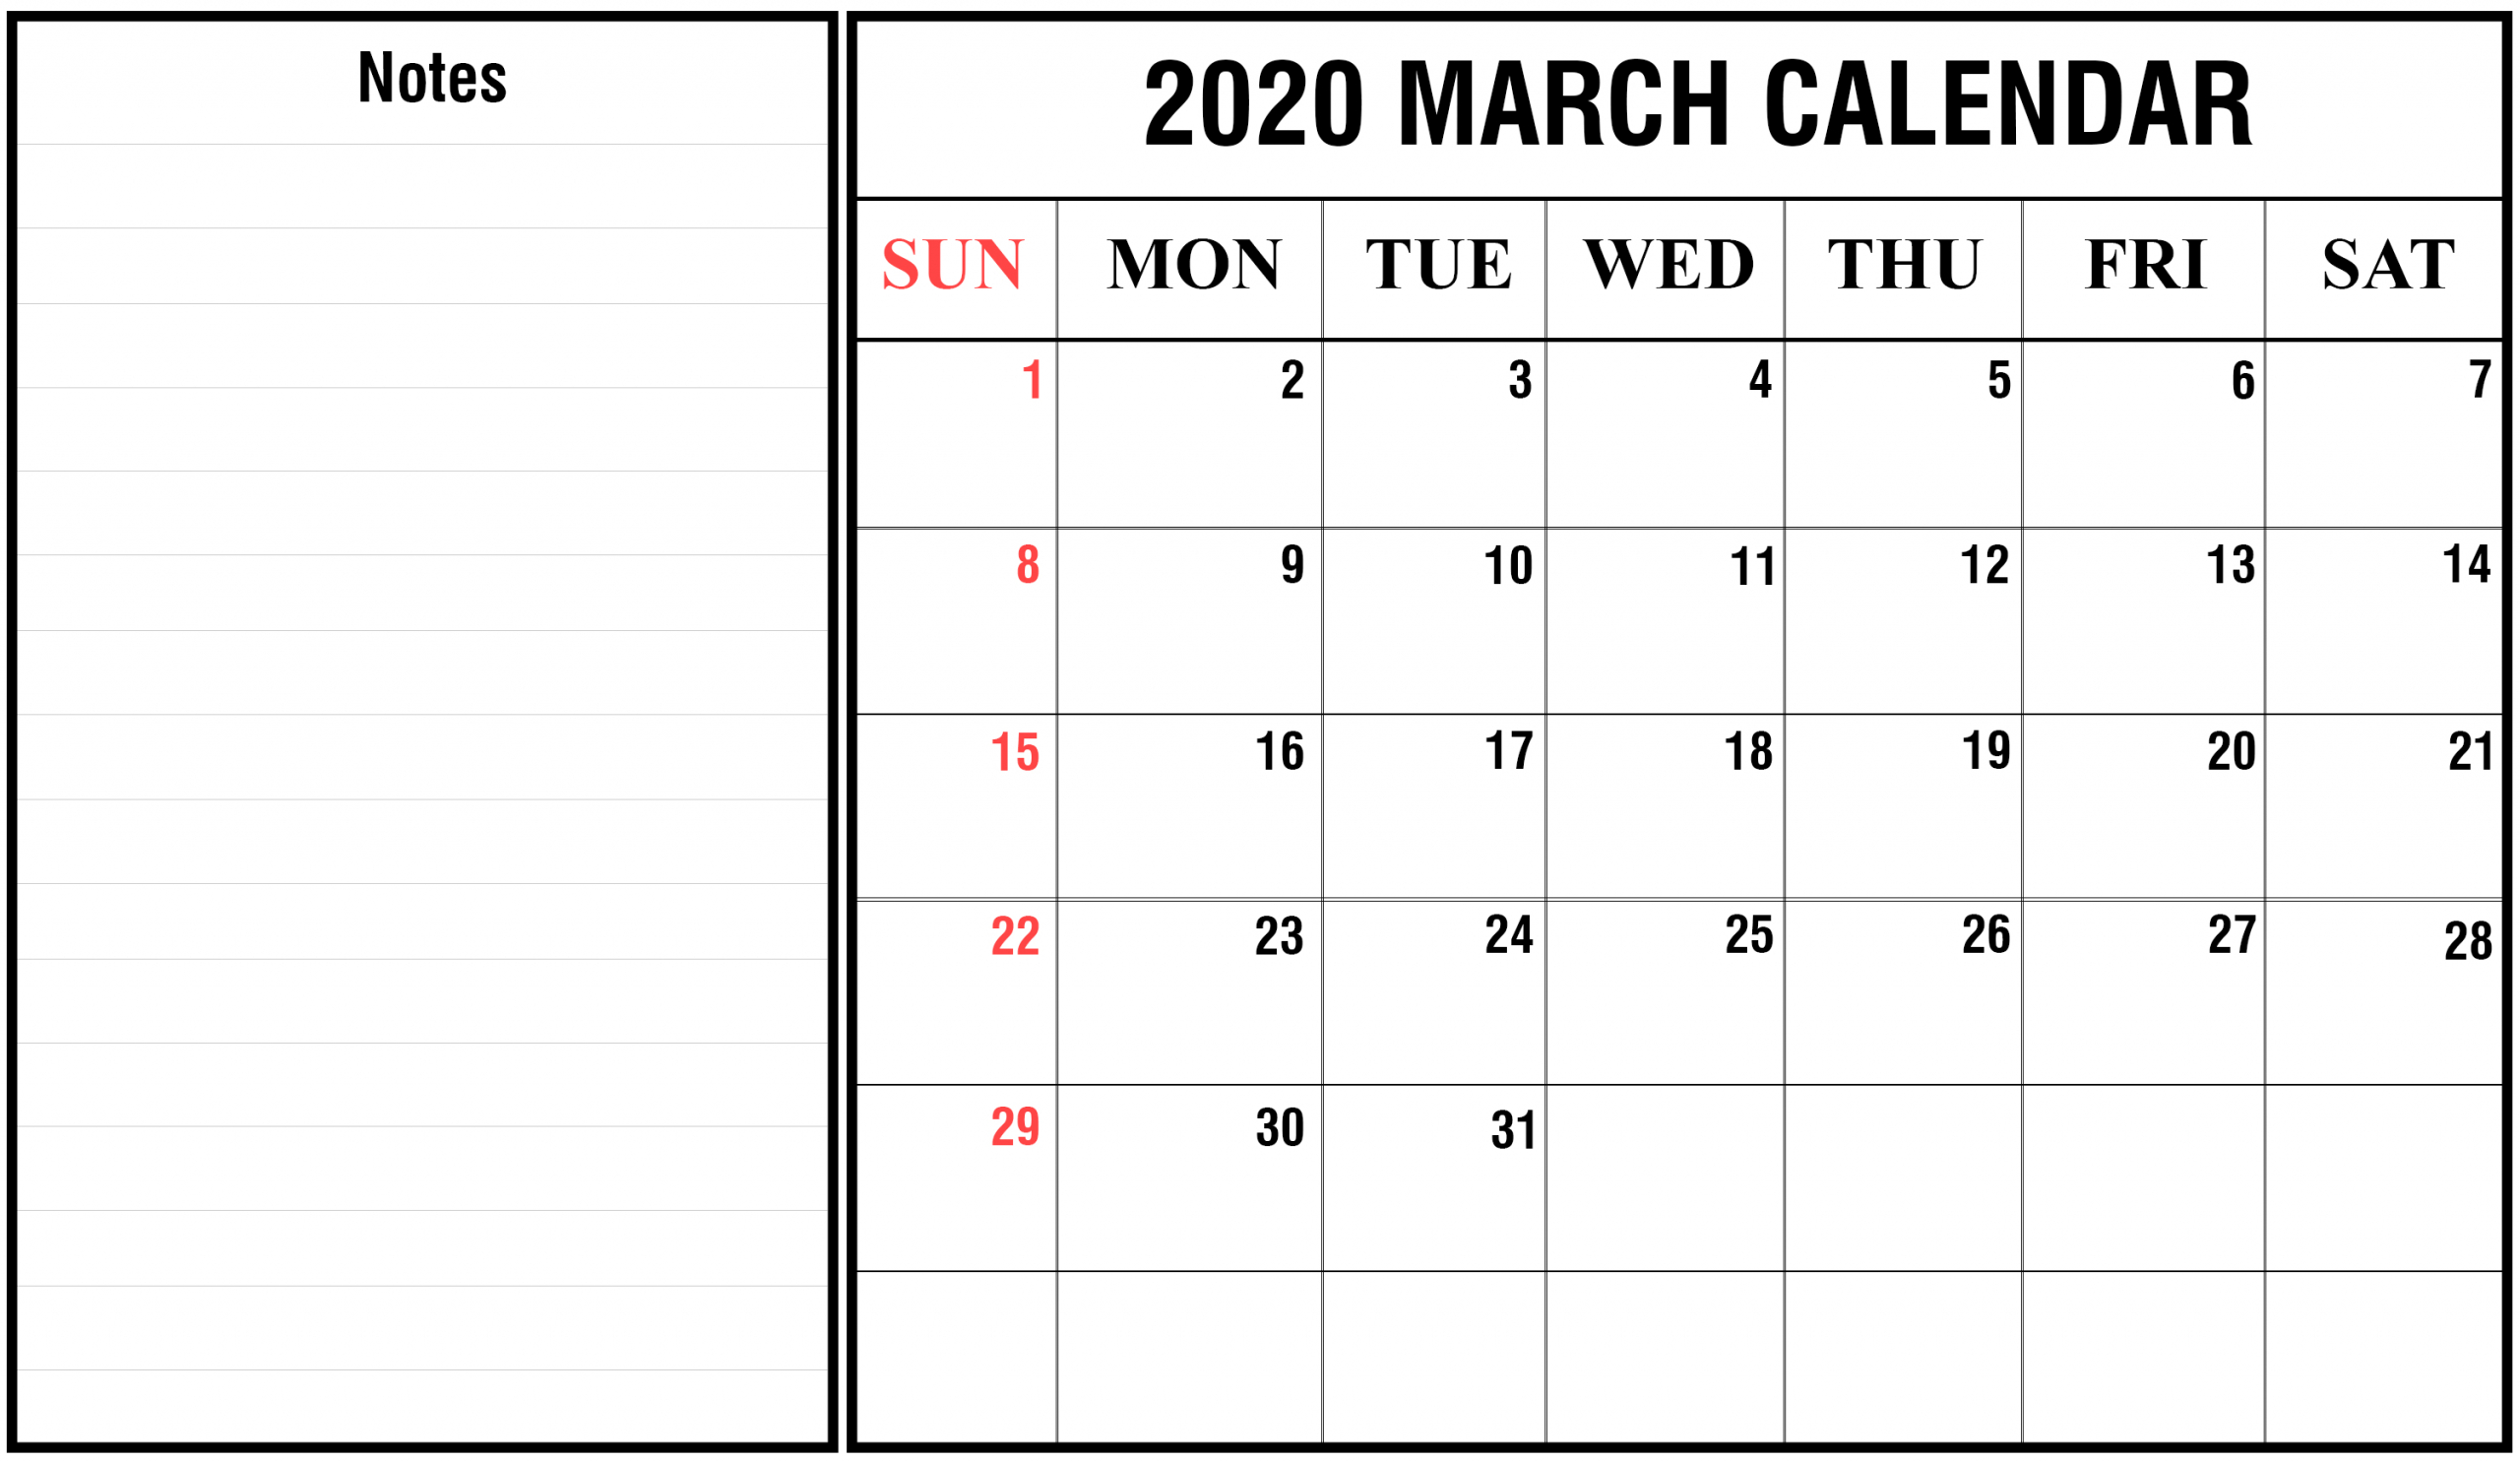 Monthly Calendar I Can Edit :-Free Calendar Template Free Monthly Calendars That Can Be Edited